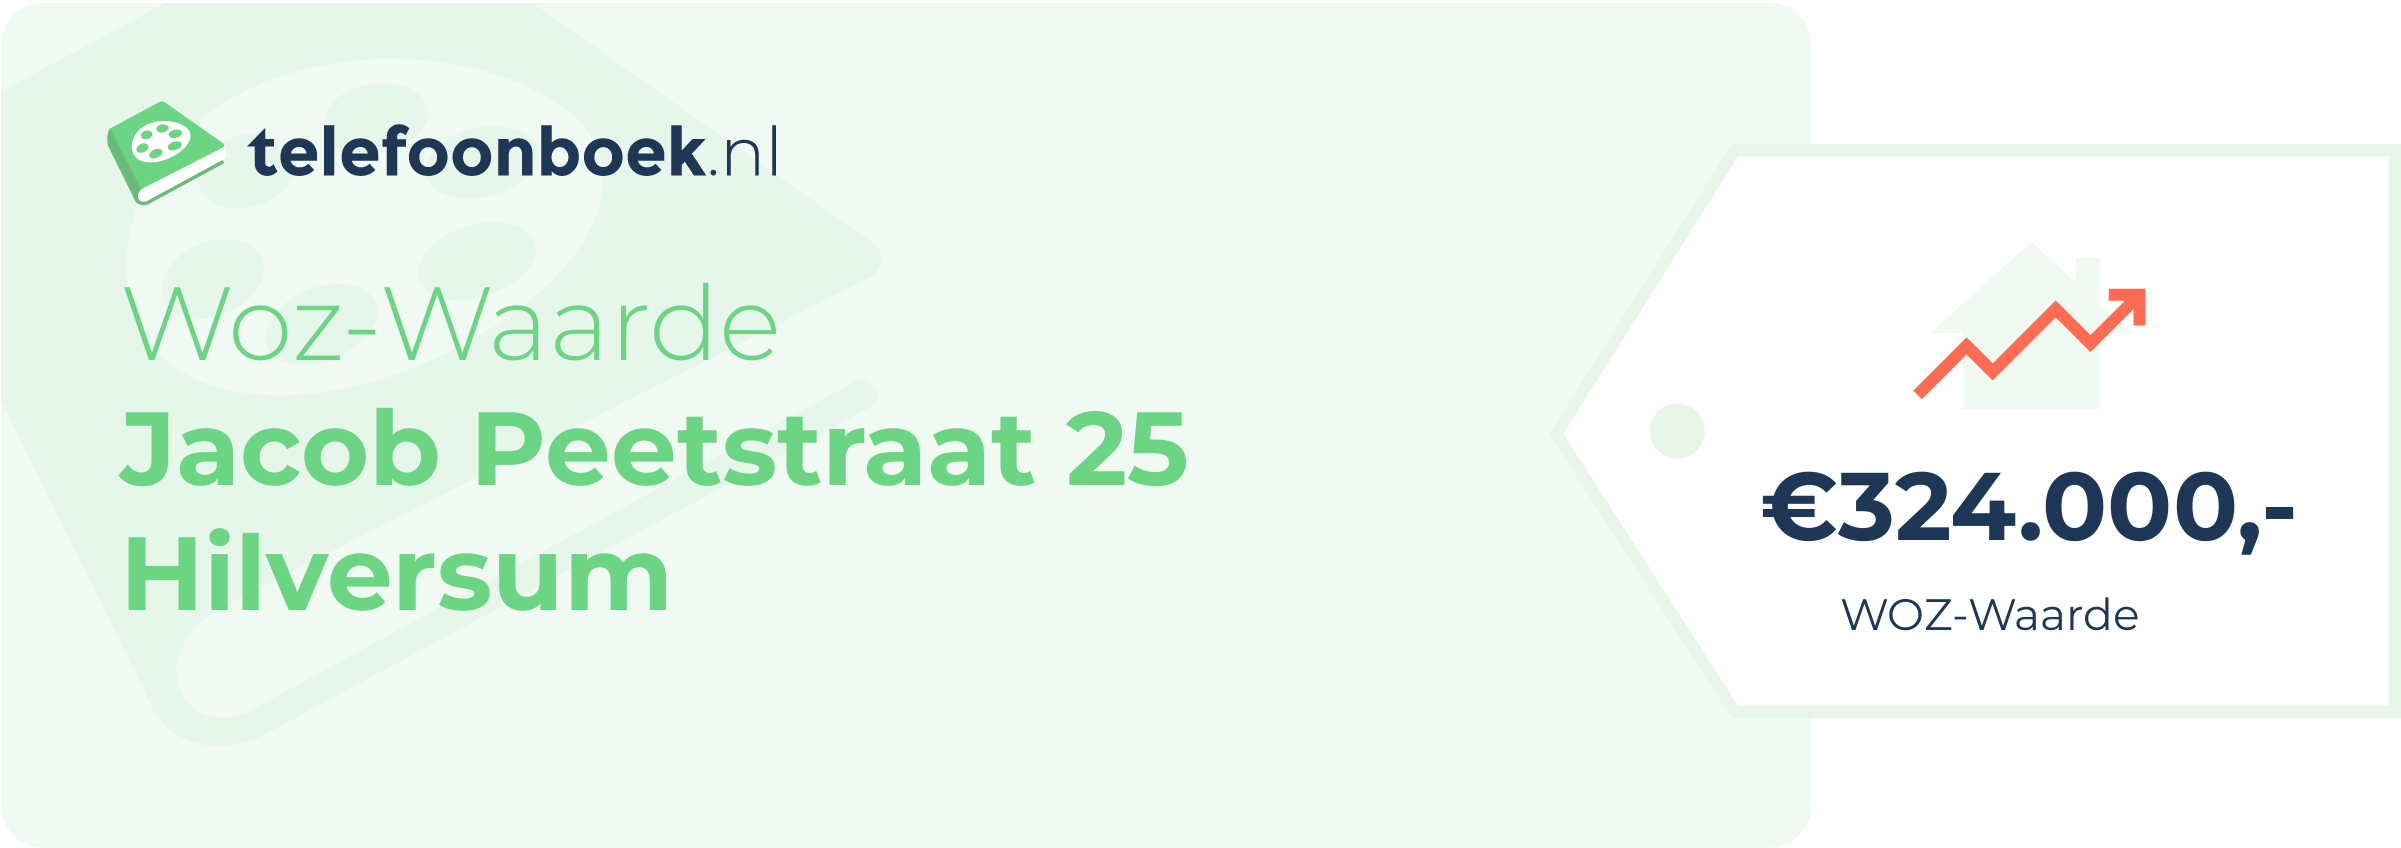 WOZ-waarde Jacob Peetstraat 25 Hilversum